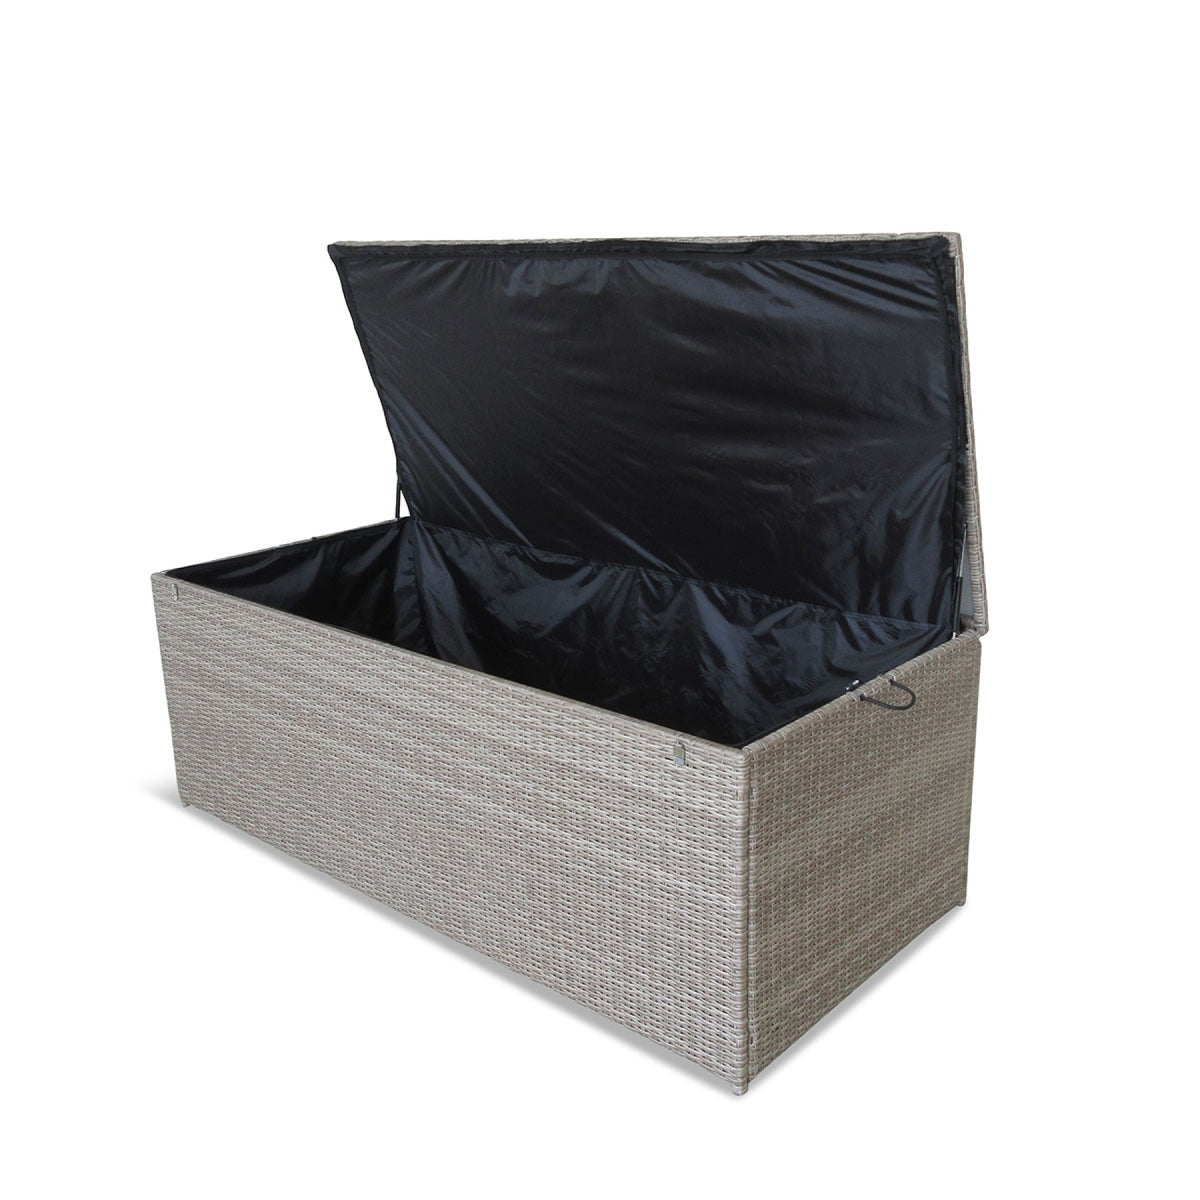 LG Outdoors St Tropez Sand Large Rattan Outdoor Cushion Storage Box